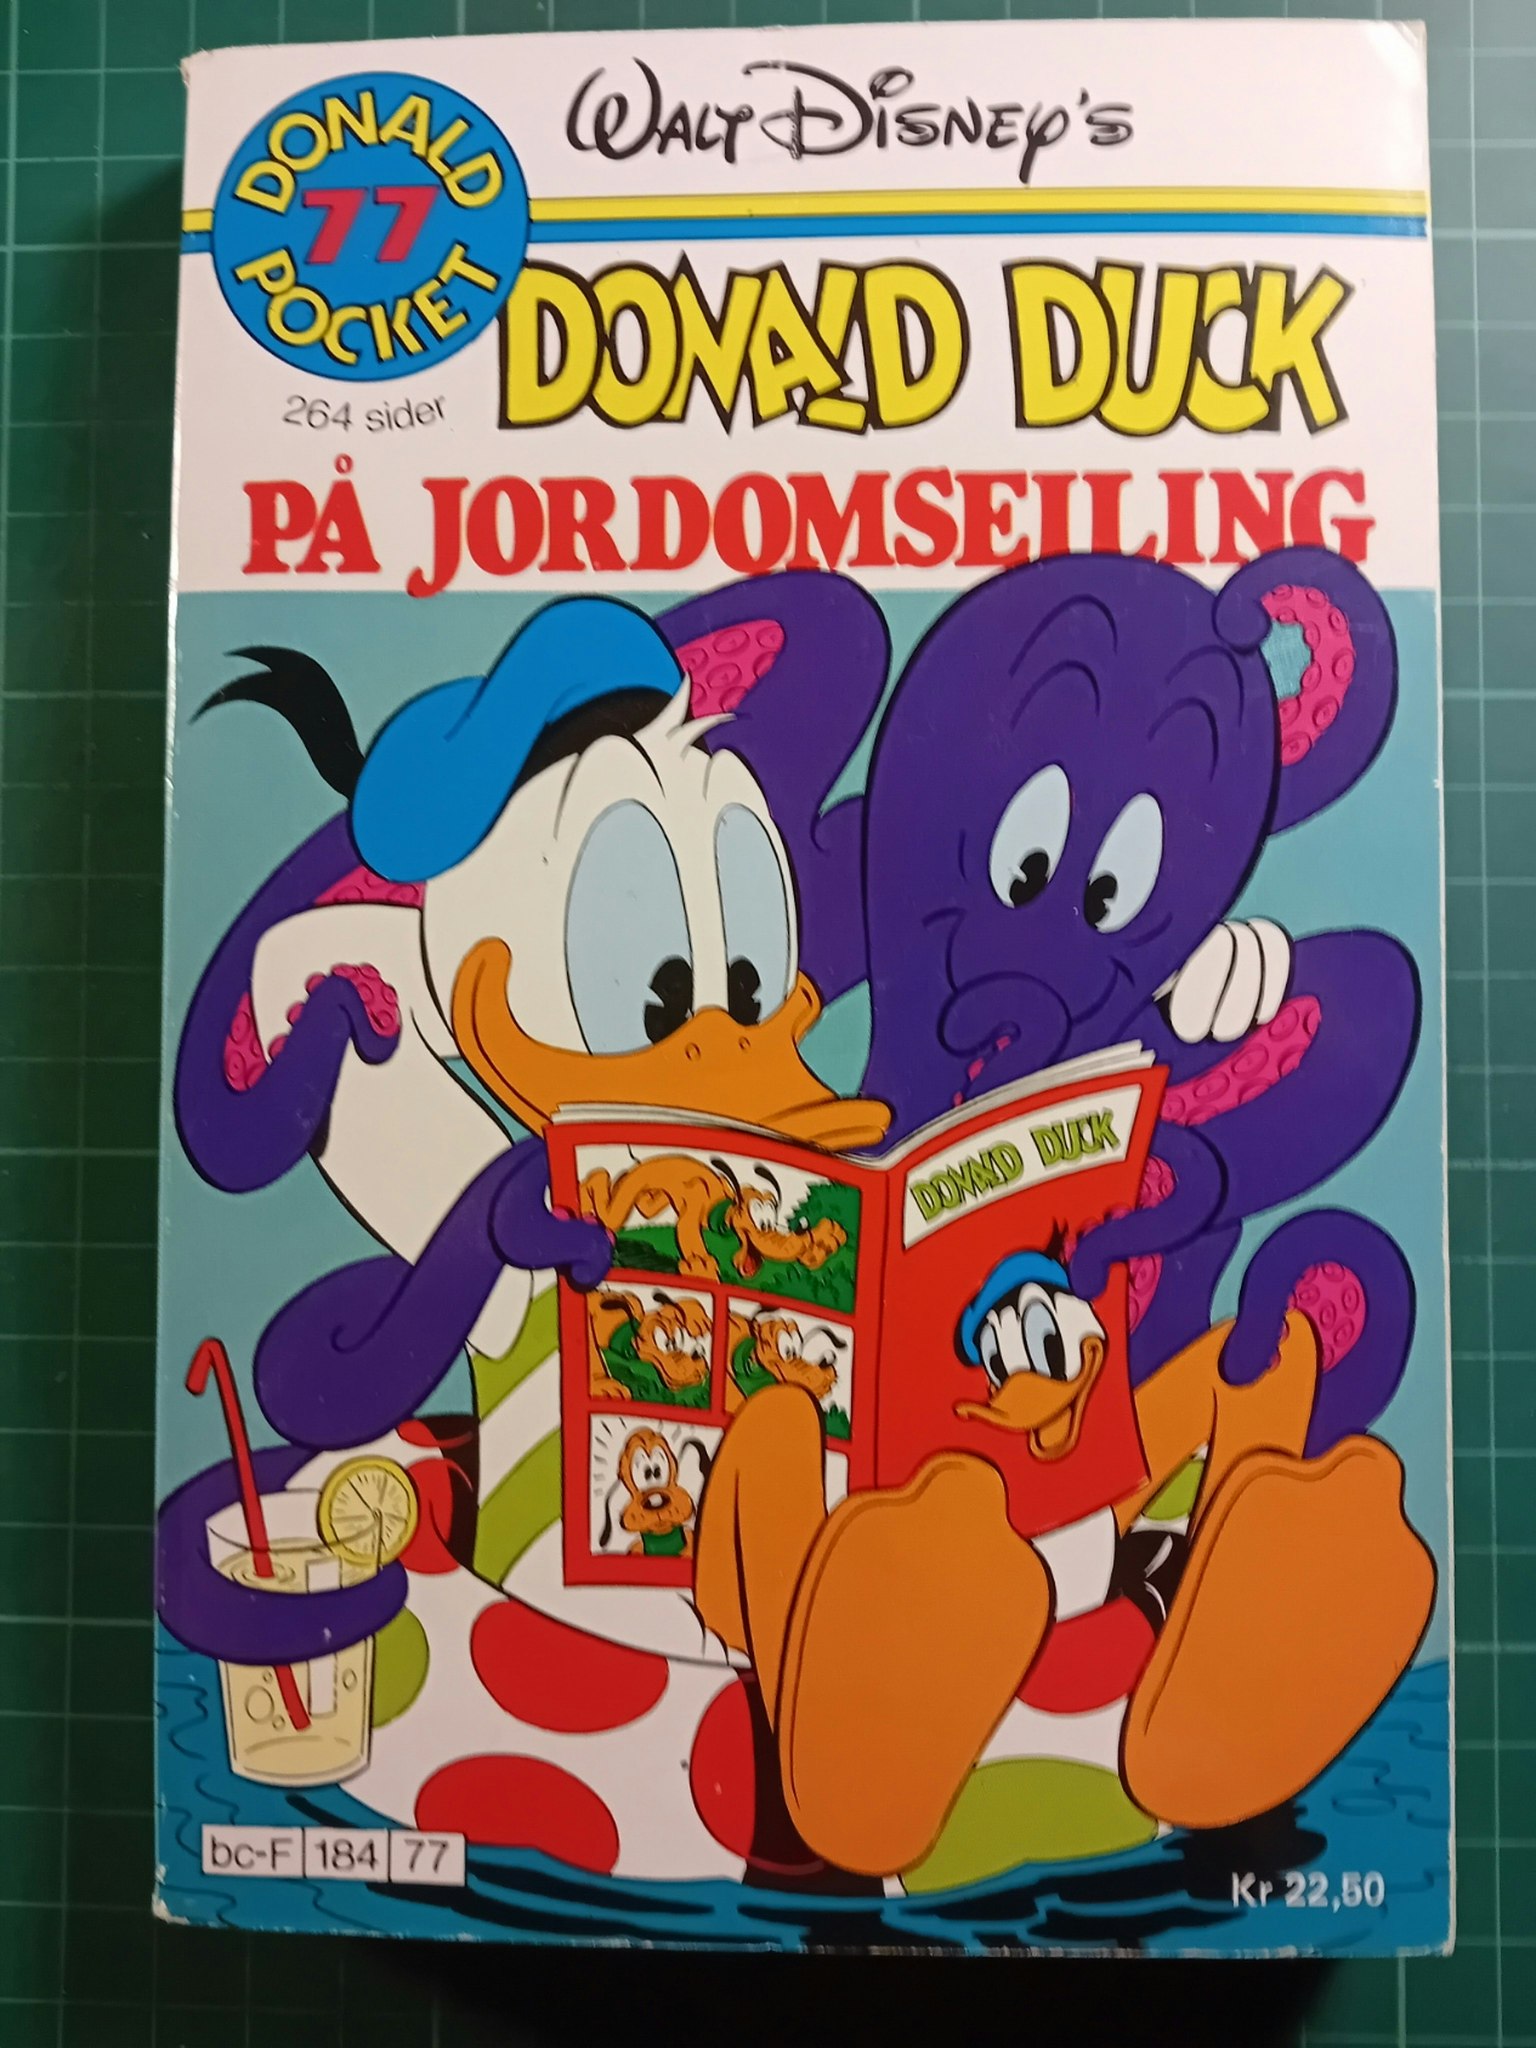 Donald Pocket 077